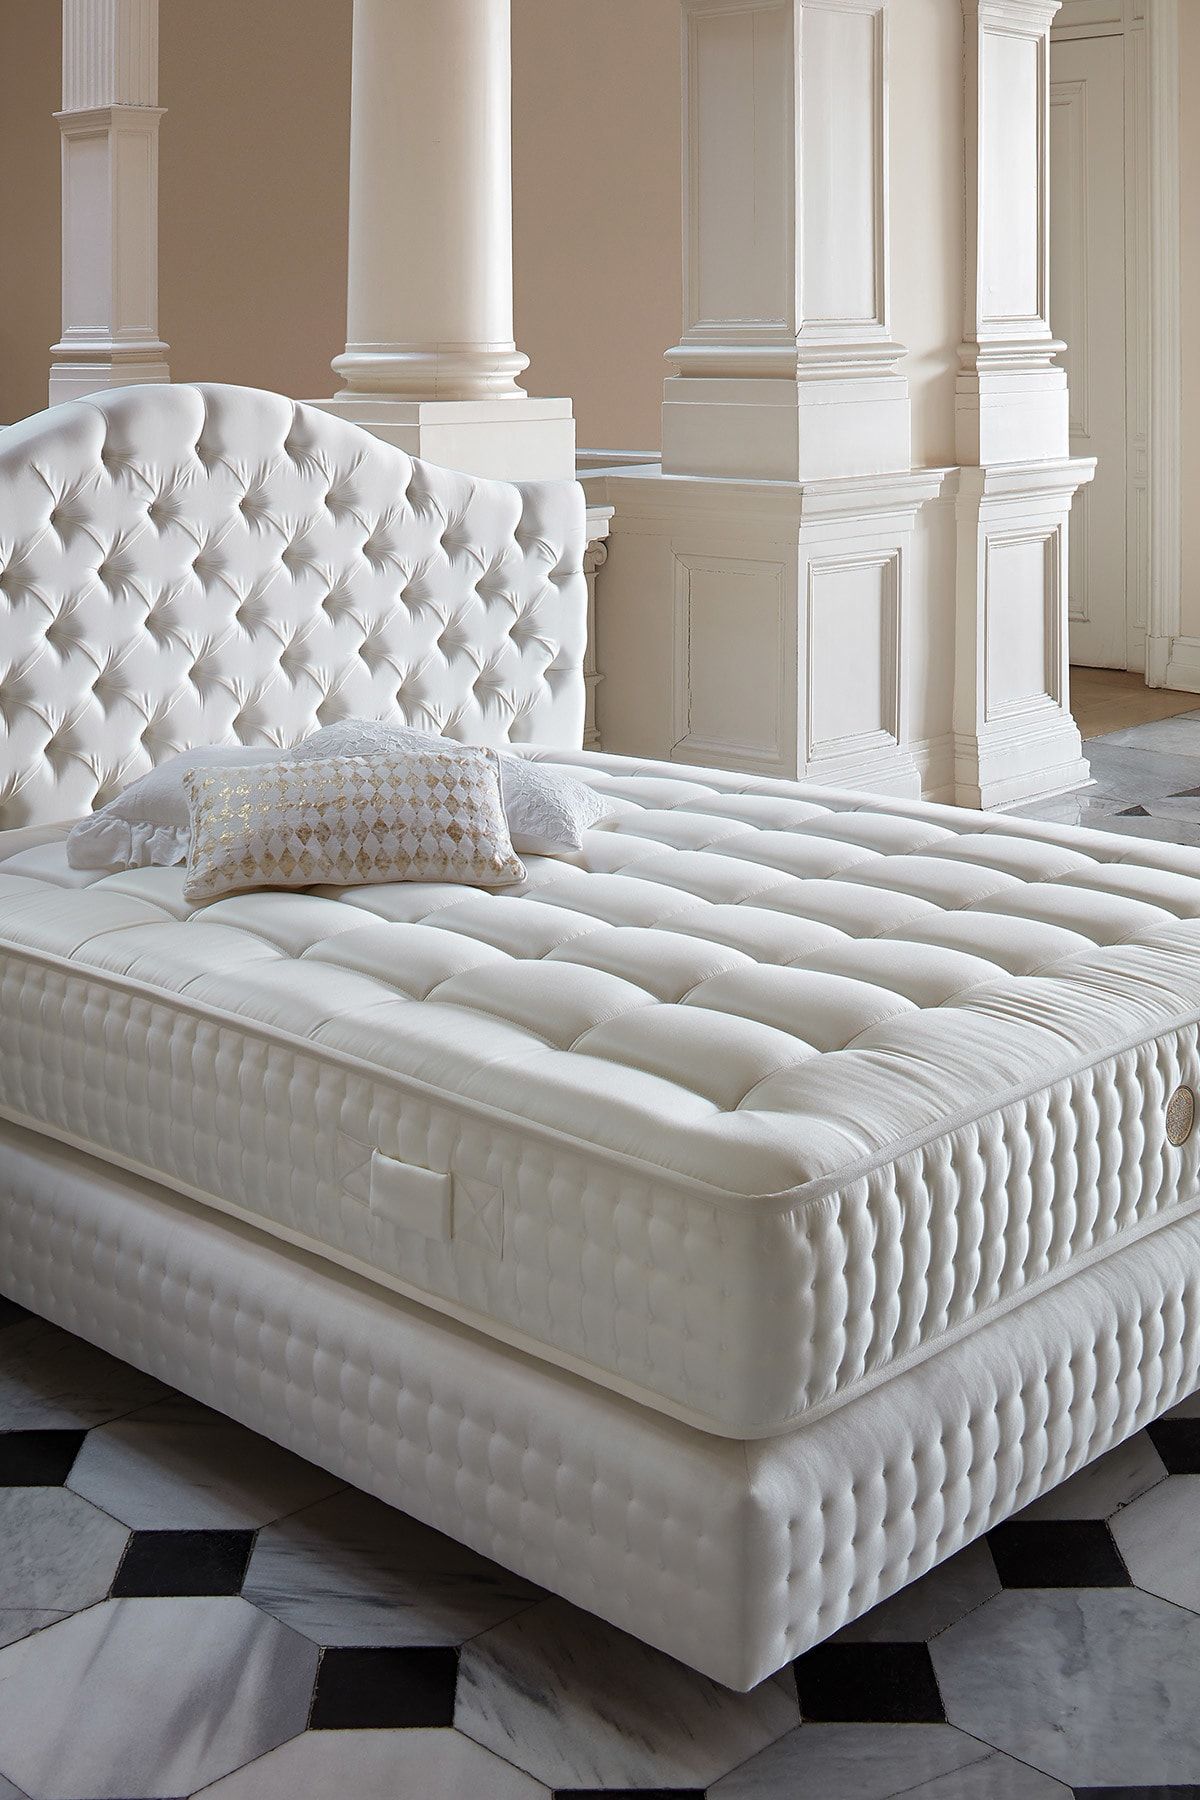 Yataş Bedding King Master 10.000 Premium Seri Yatak Fiyatı, Yorumları